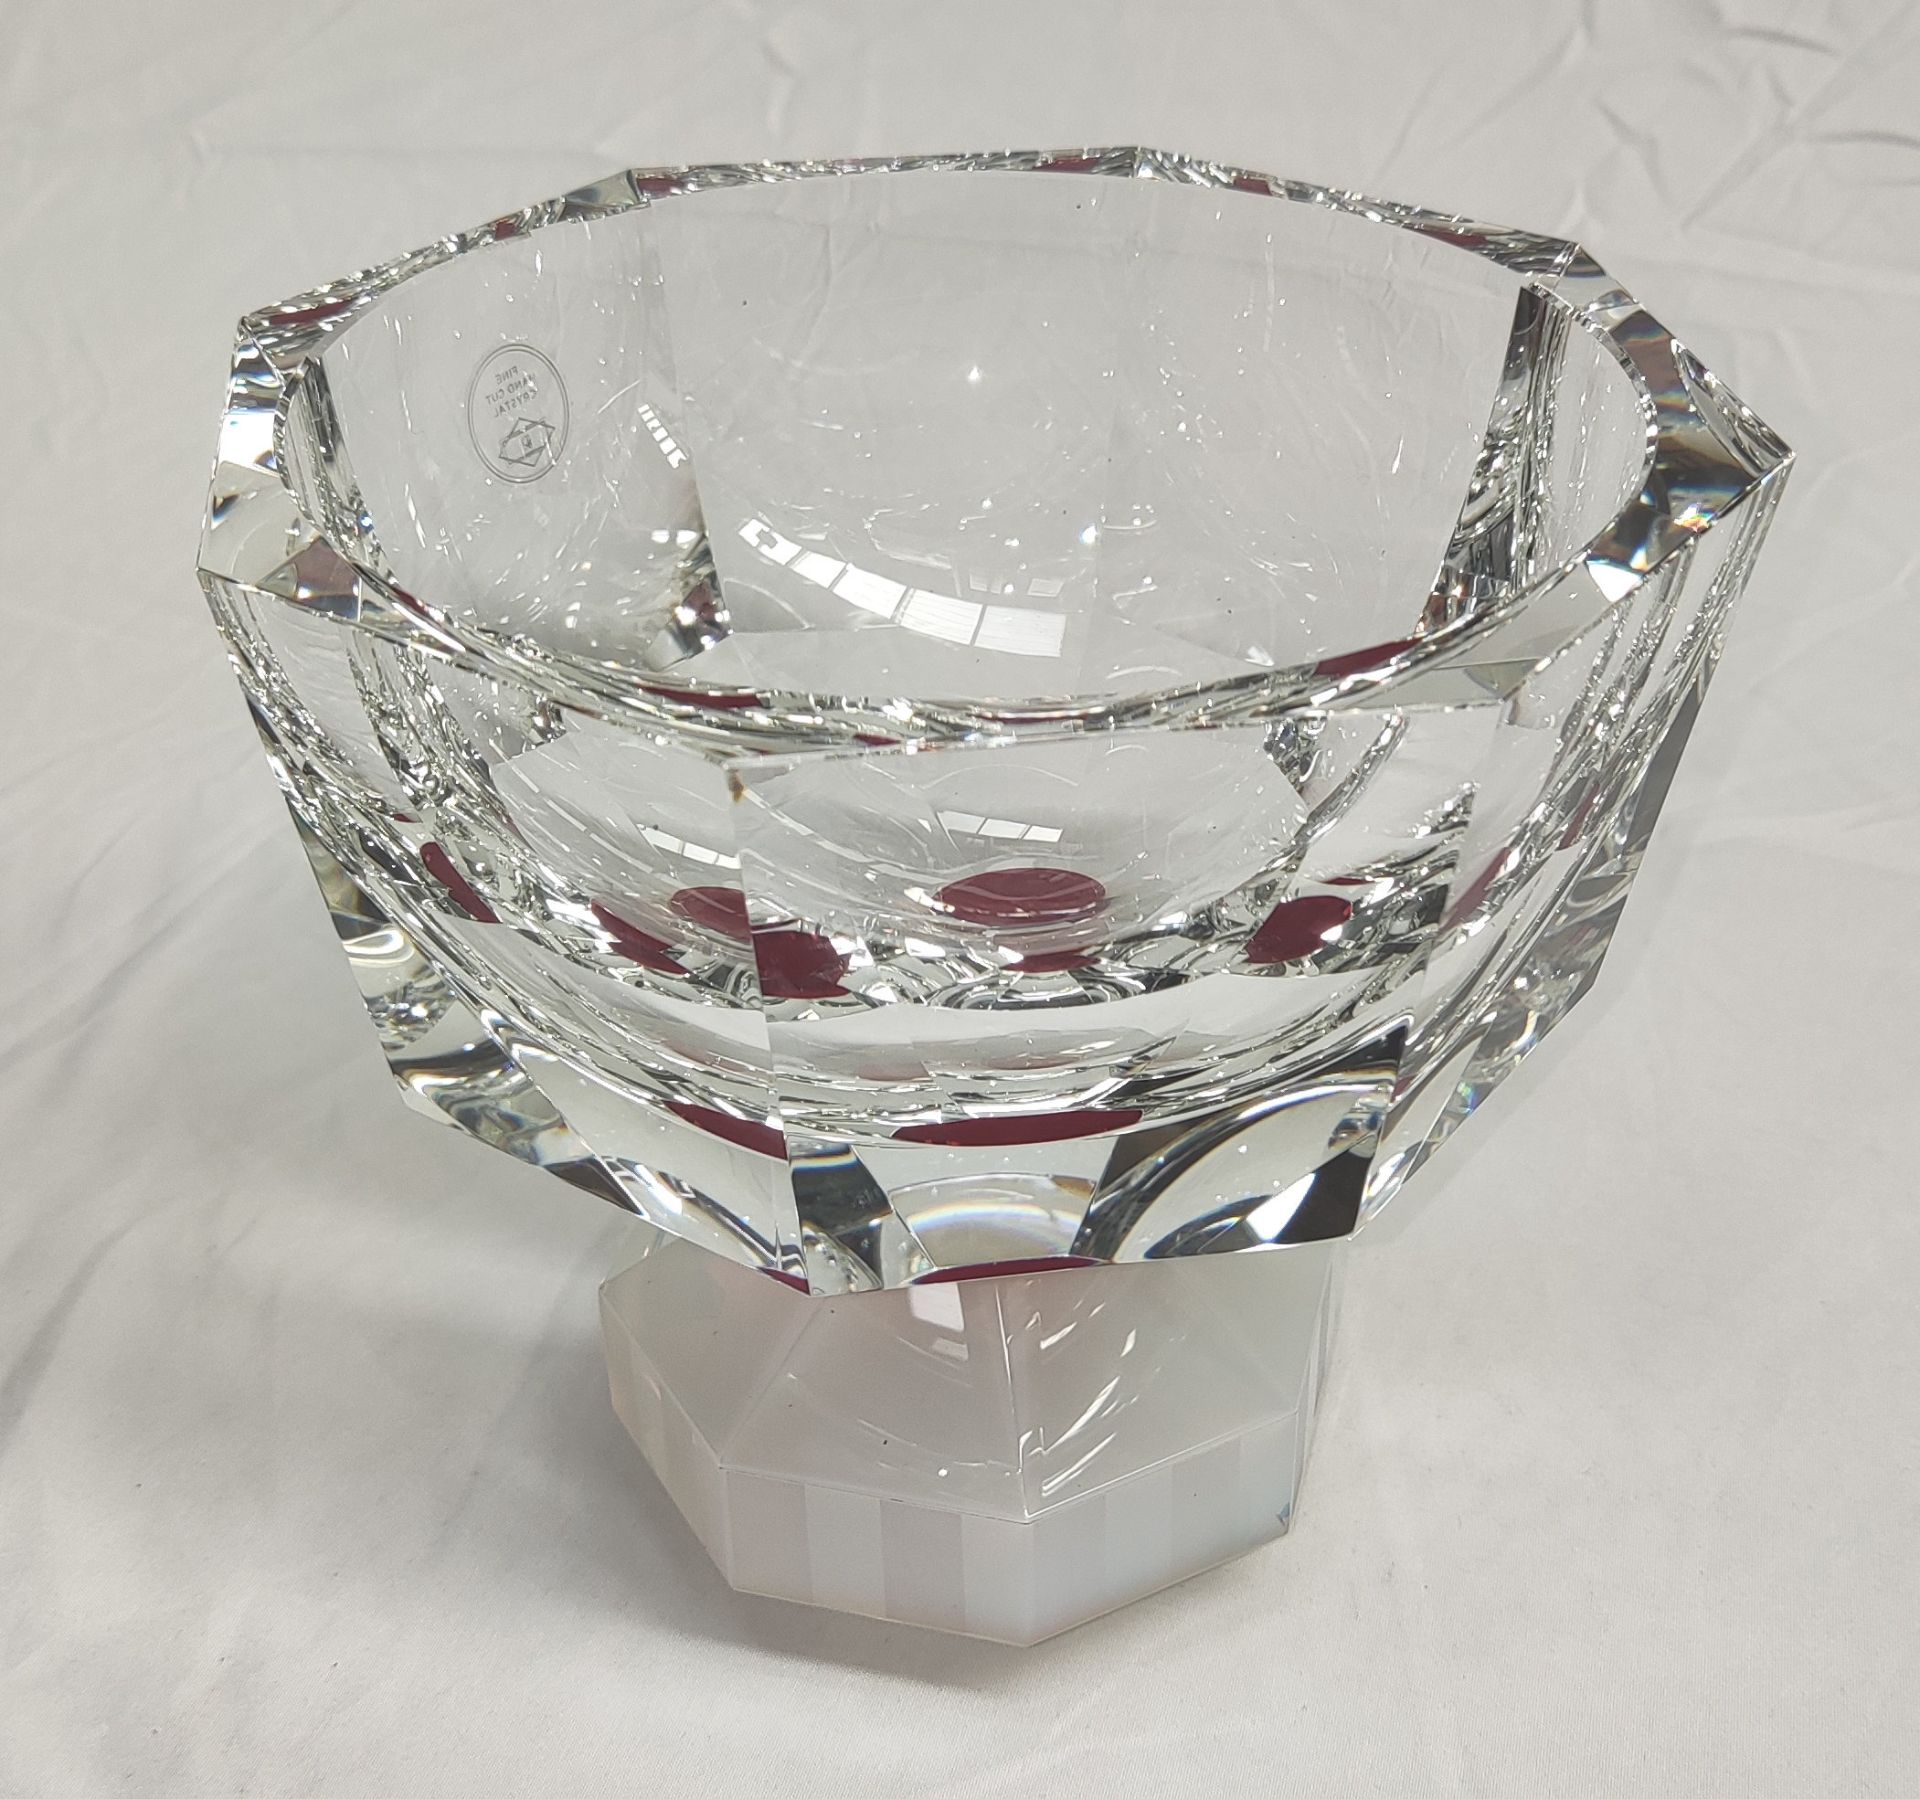 1 x REFLECTIONS COPENHAGEN Halifax Hand-Cut Crystal Glass Bowl In Clear/Milk/Plum - Original RRP £ - Image 8 of 21